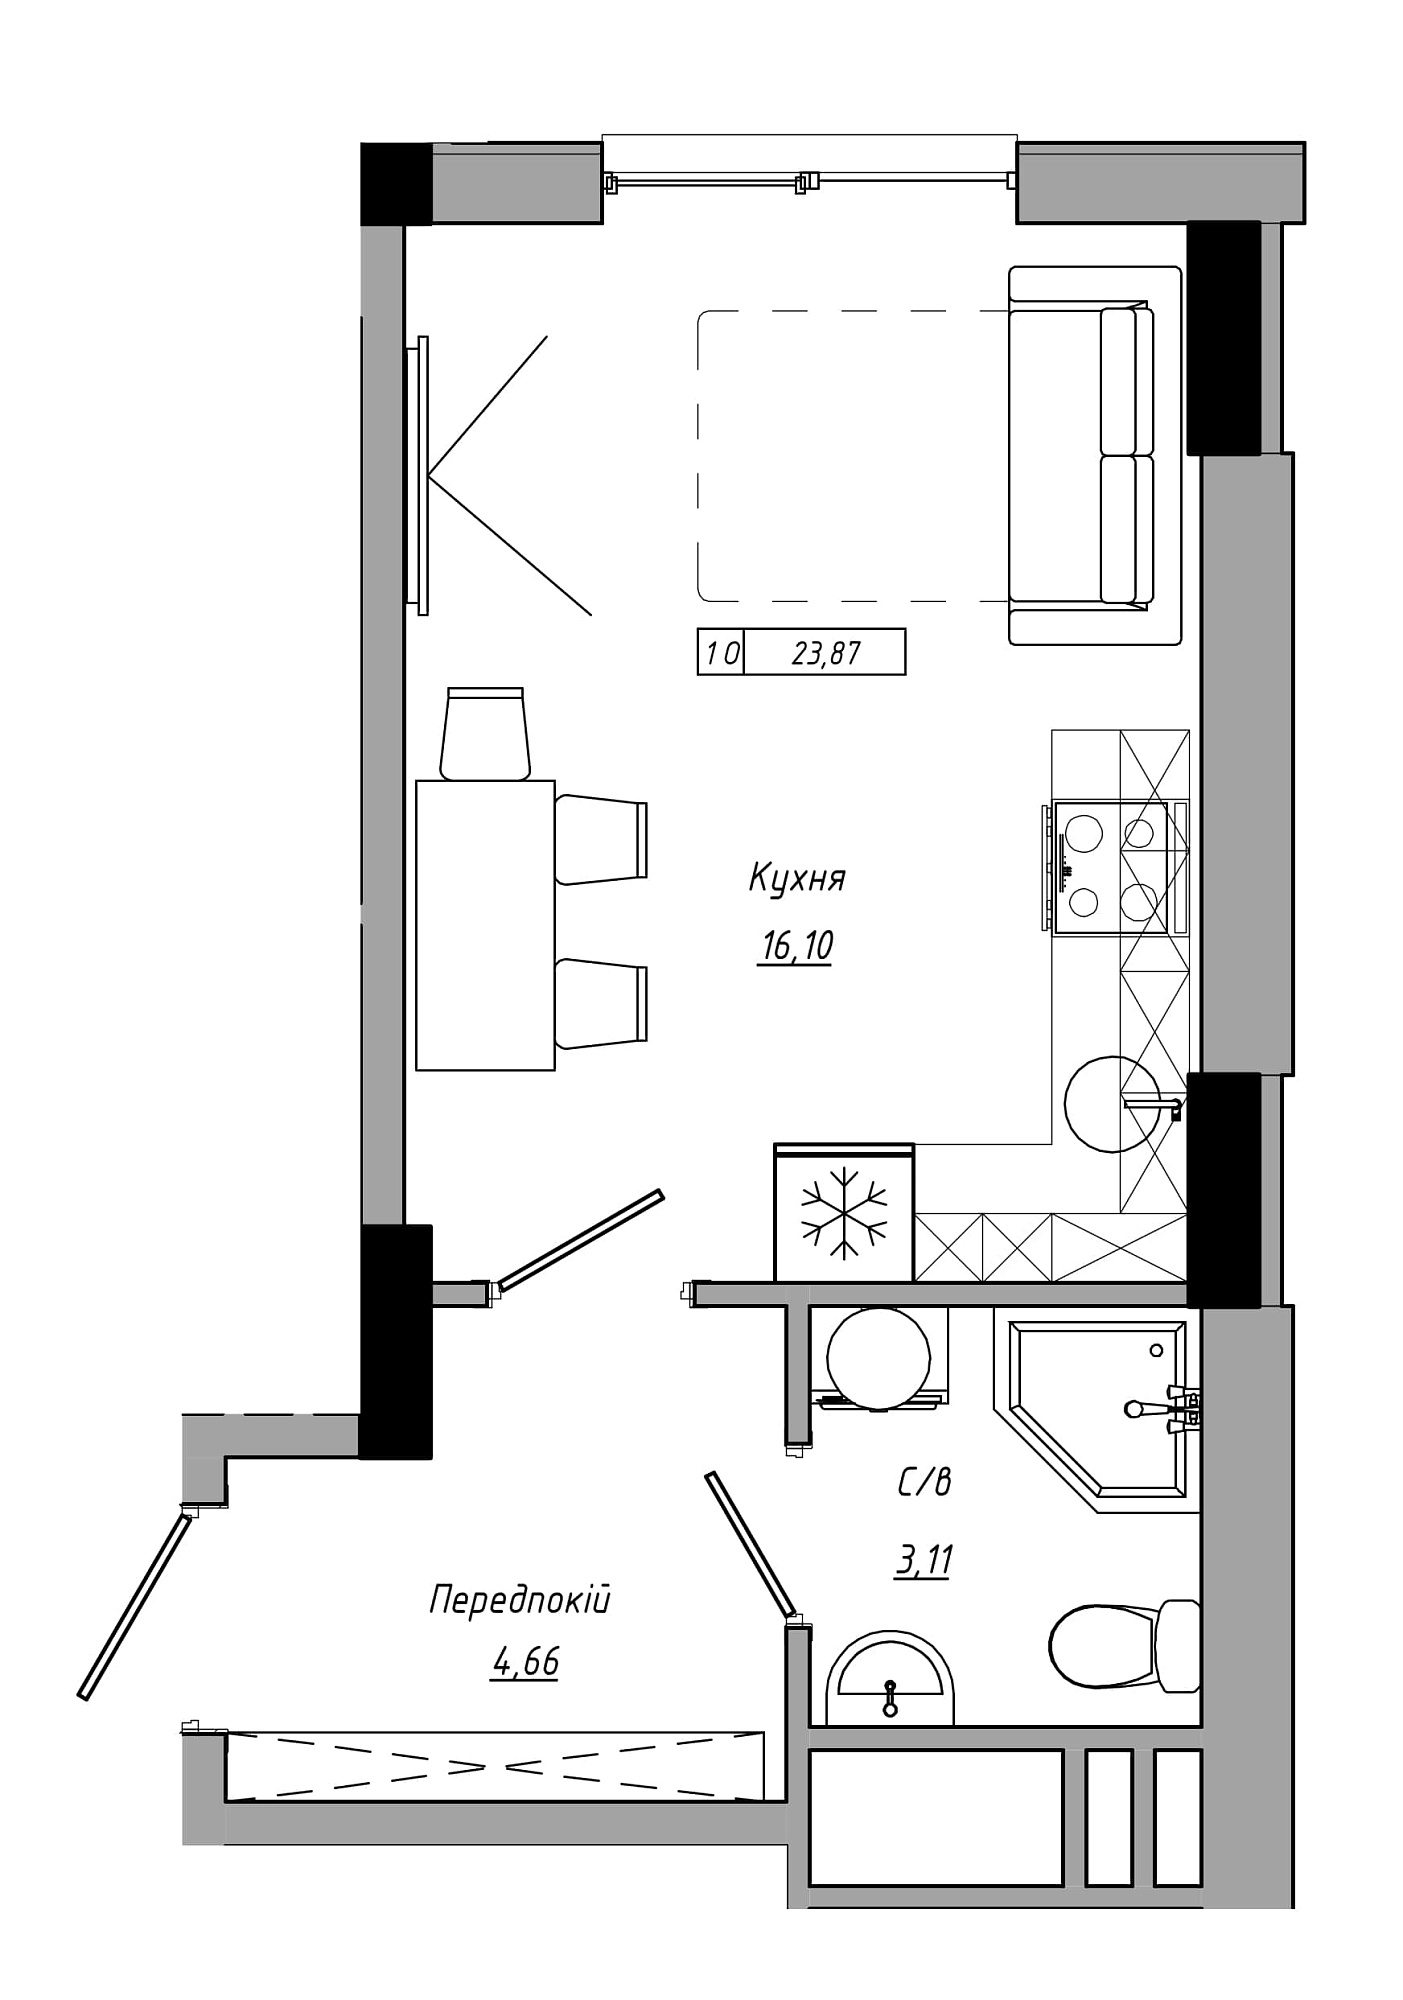 Planning Smart flats area 23.87m2, AB-21-07/00017.